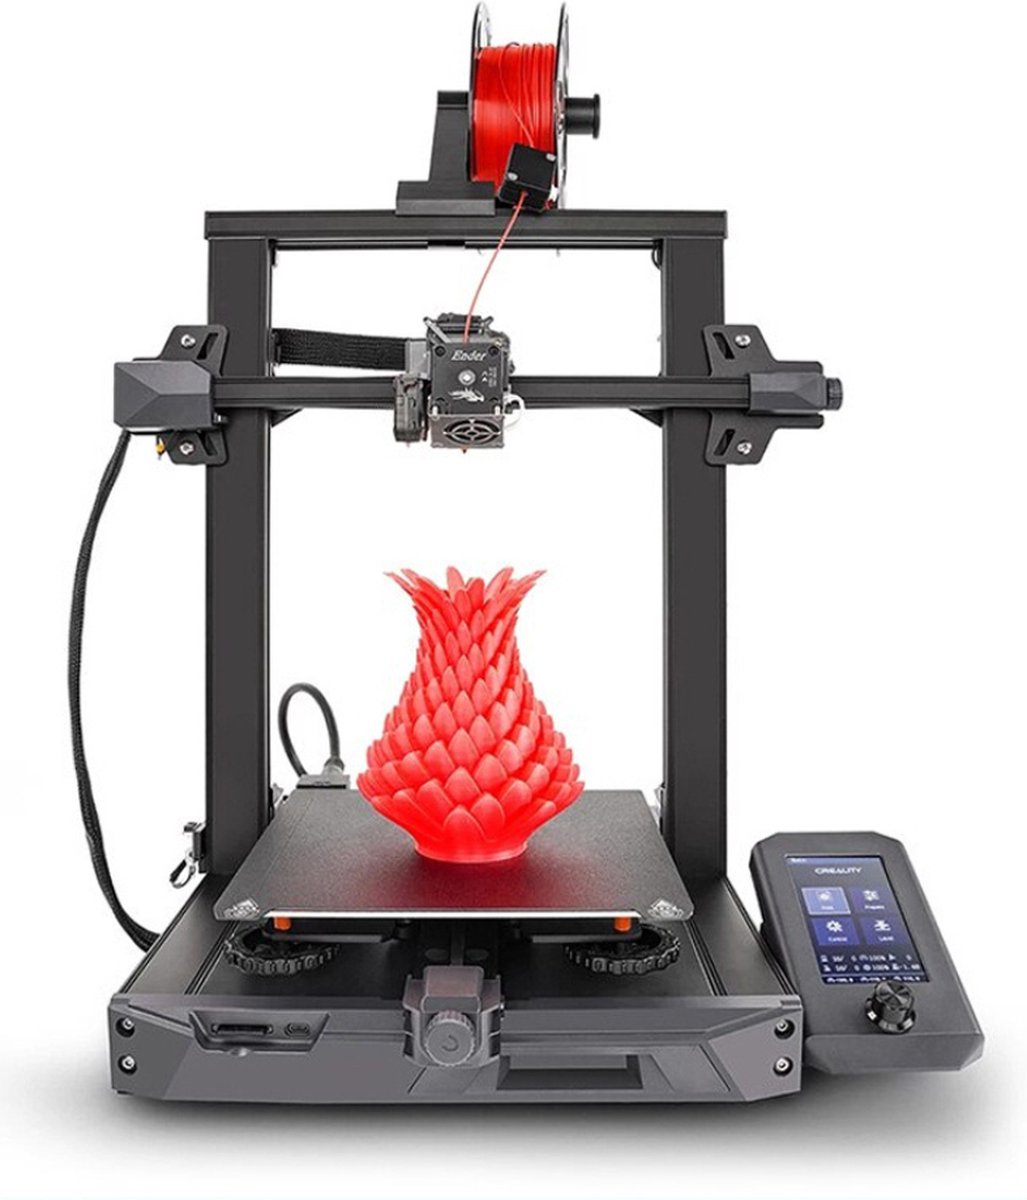 Bolture 3D Printer - Bouwpakket - Starterspakket - DIY - 220 x 220 x 270 mm - Inclusief PLA Filament